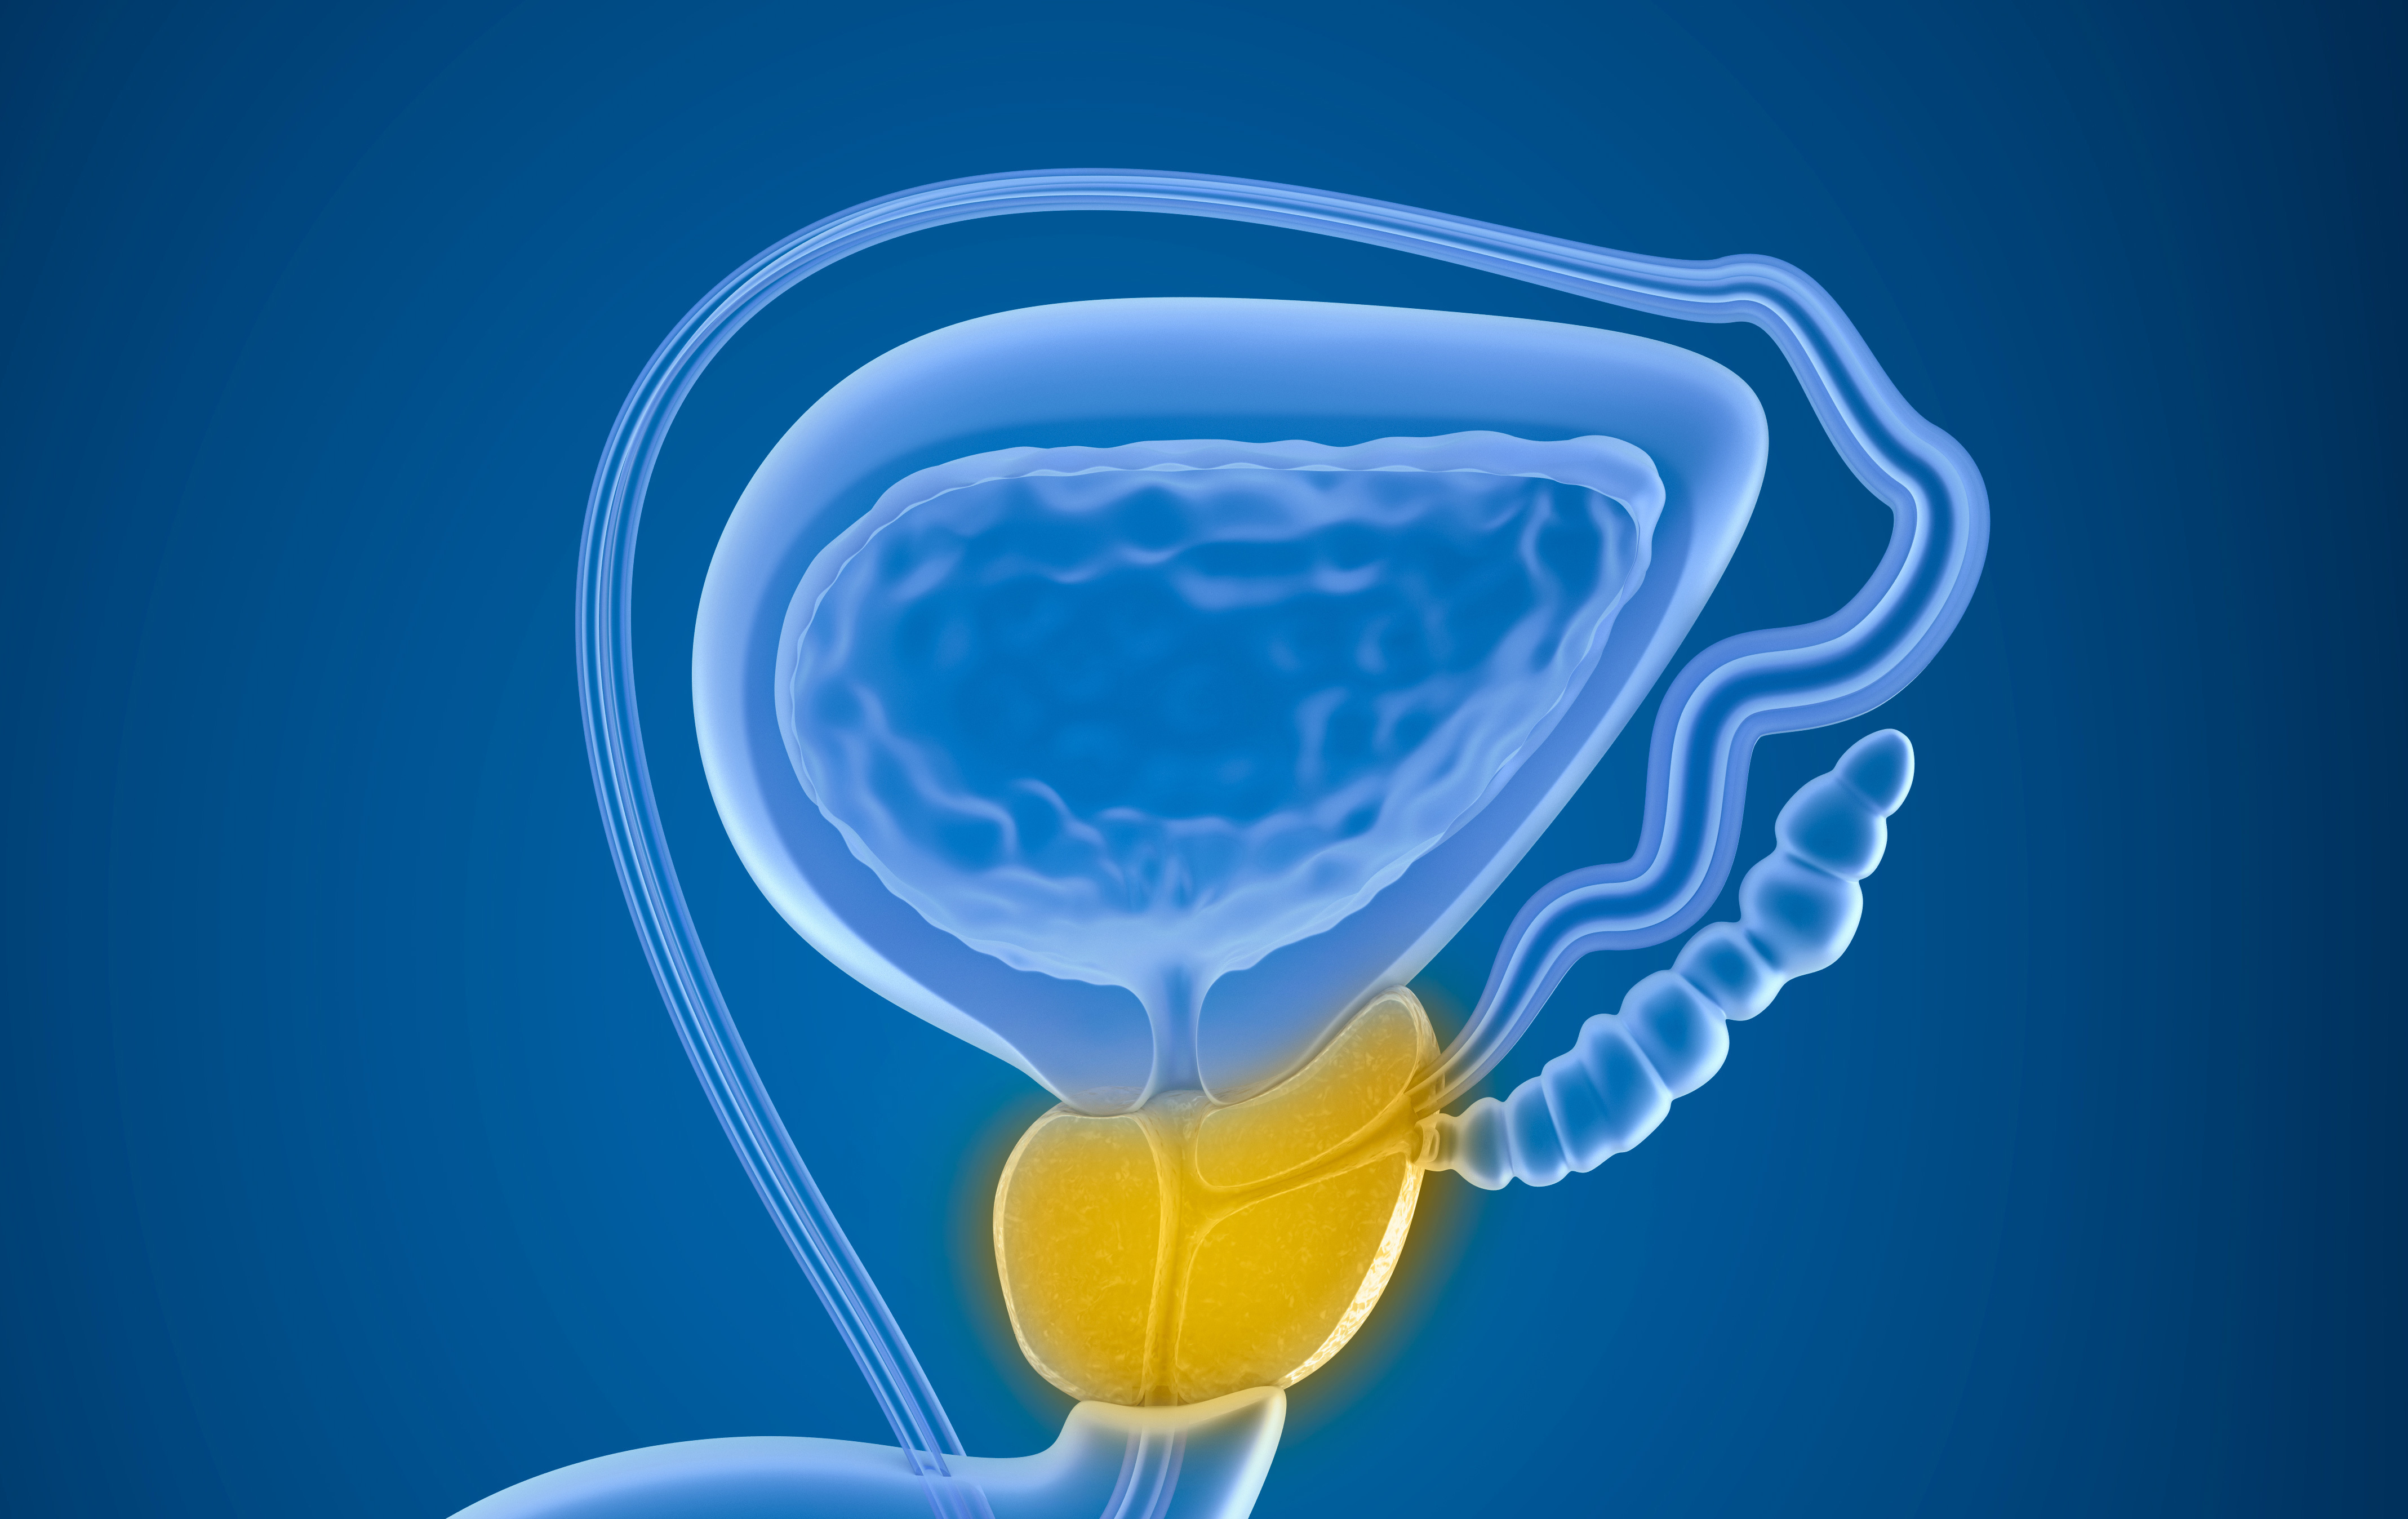 bakterijska upala prostate, prostatitis | zdravlje i prevencija, muško zdravlje,magazin